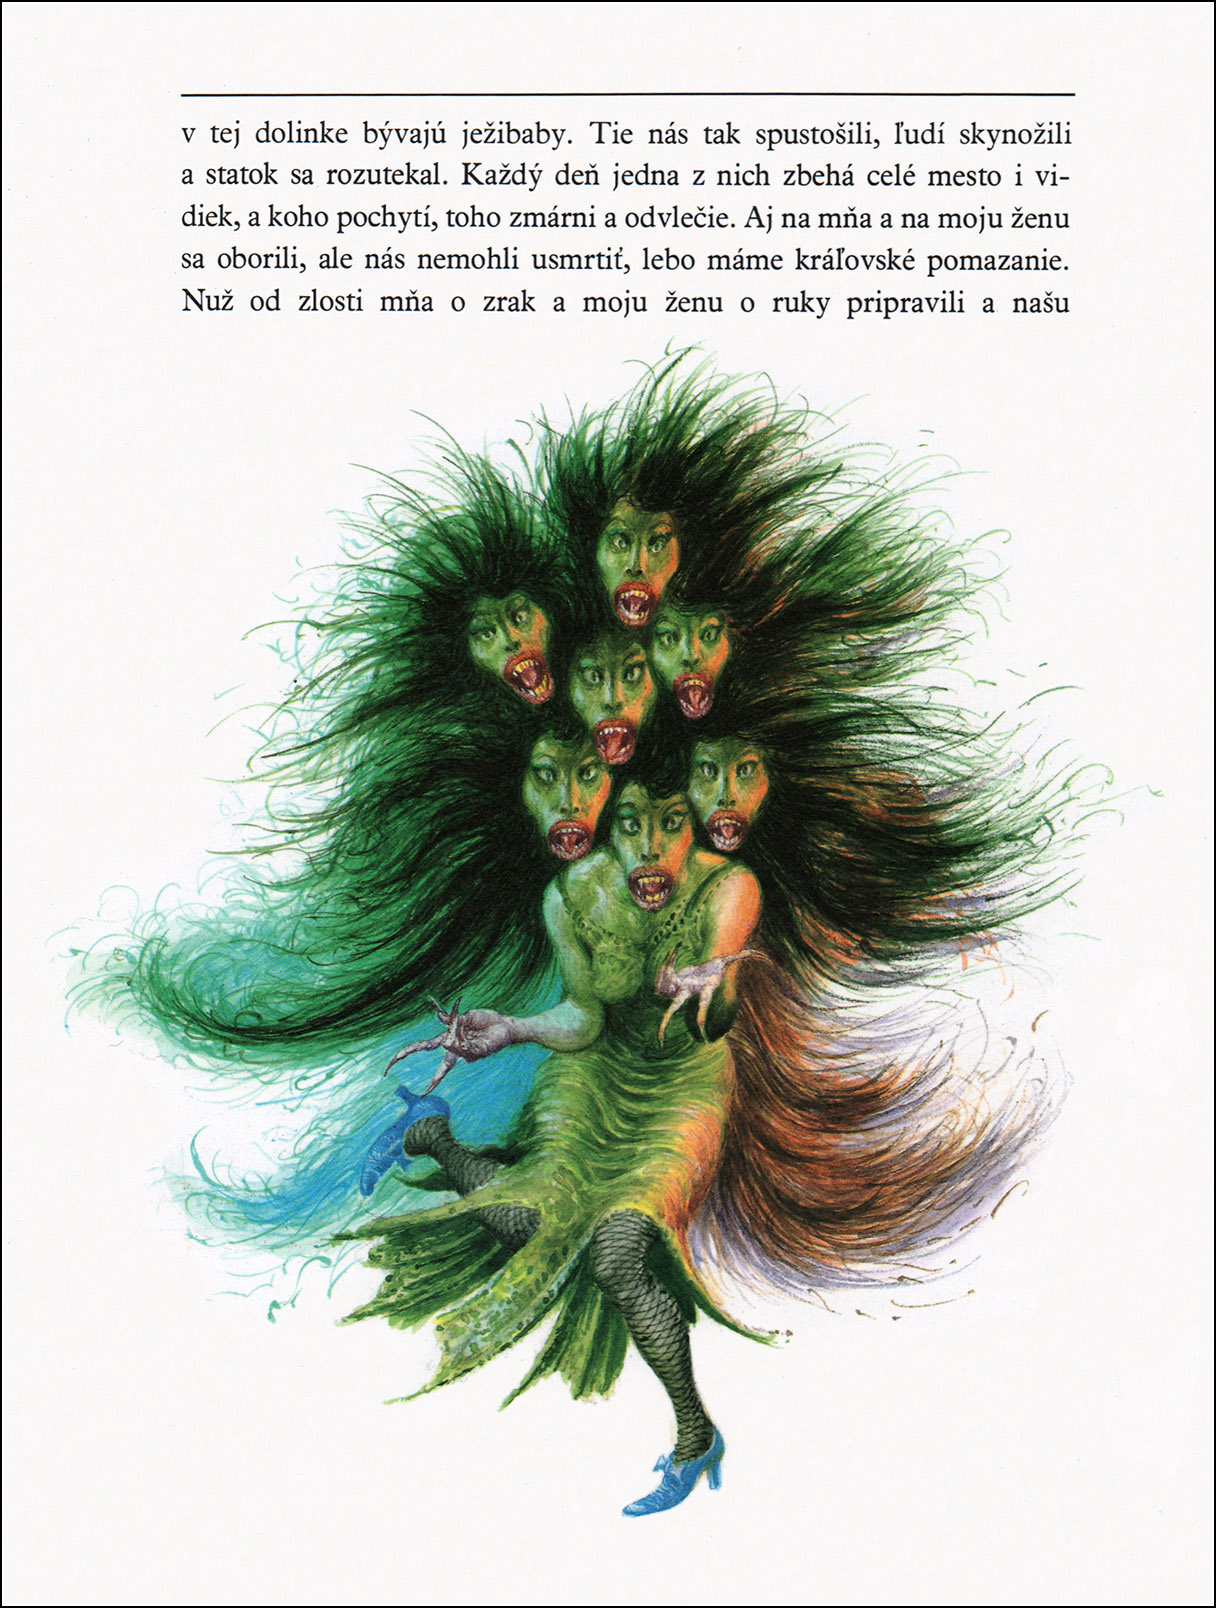 Albin Brunovsky - Illustration - 9, from Pavol Dobšinský's "Slovak Fairy Tales - The third book from the collection of Pavol" 1988